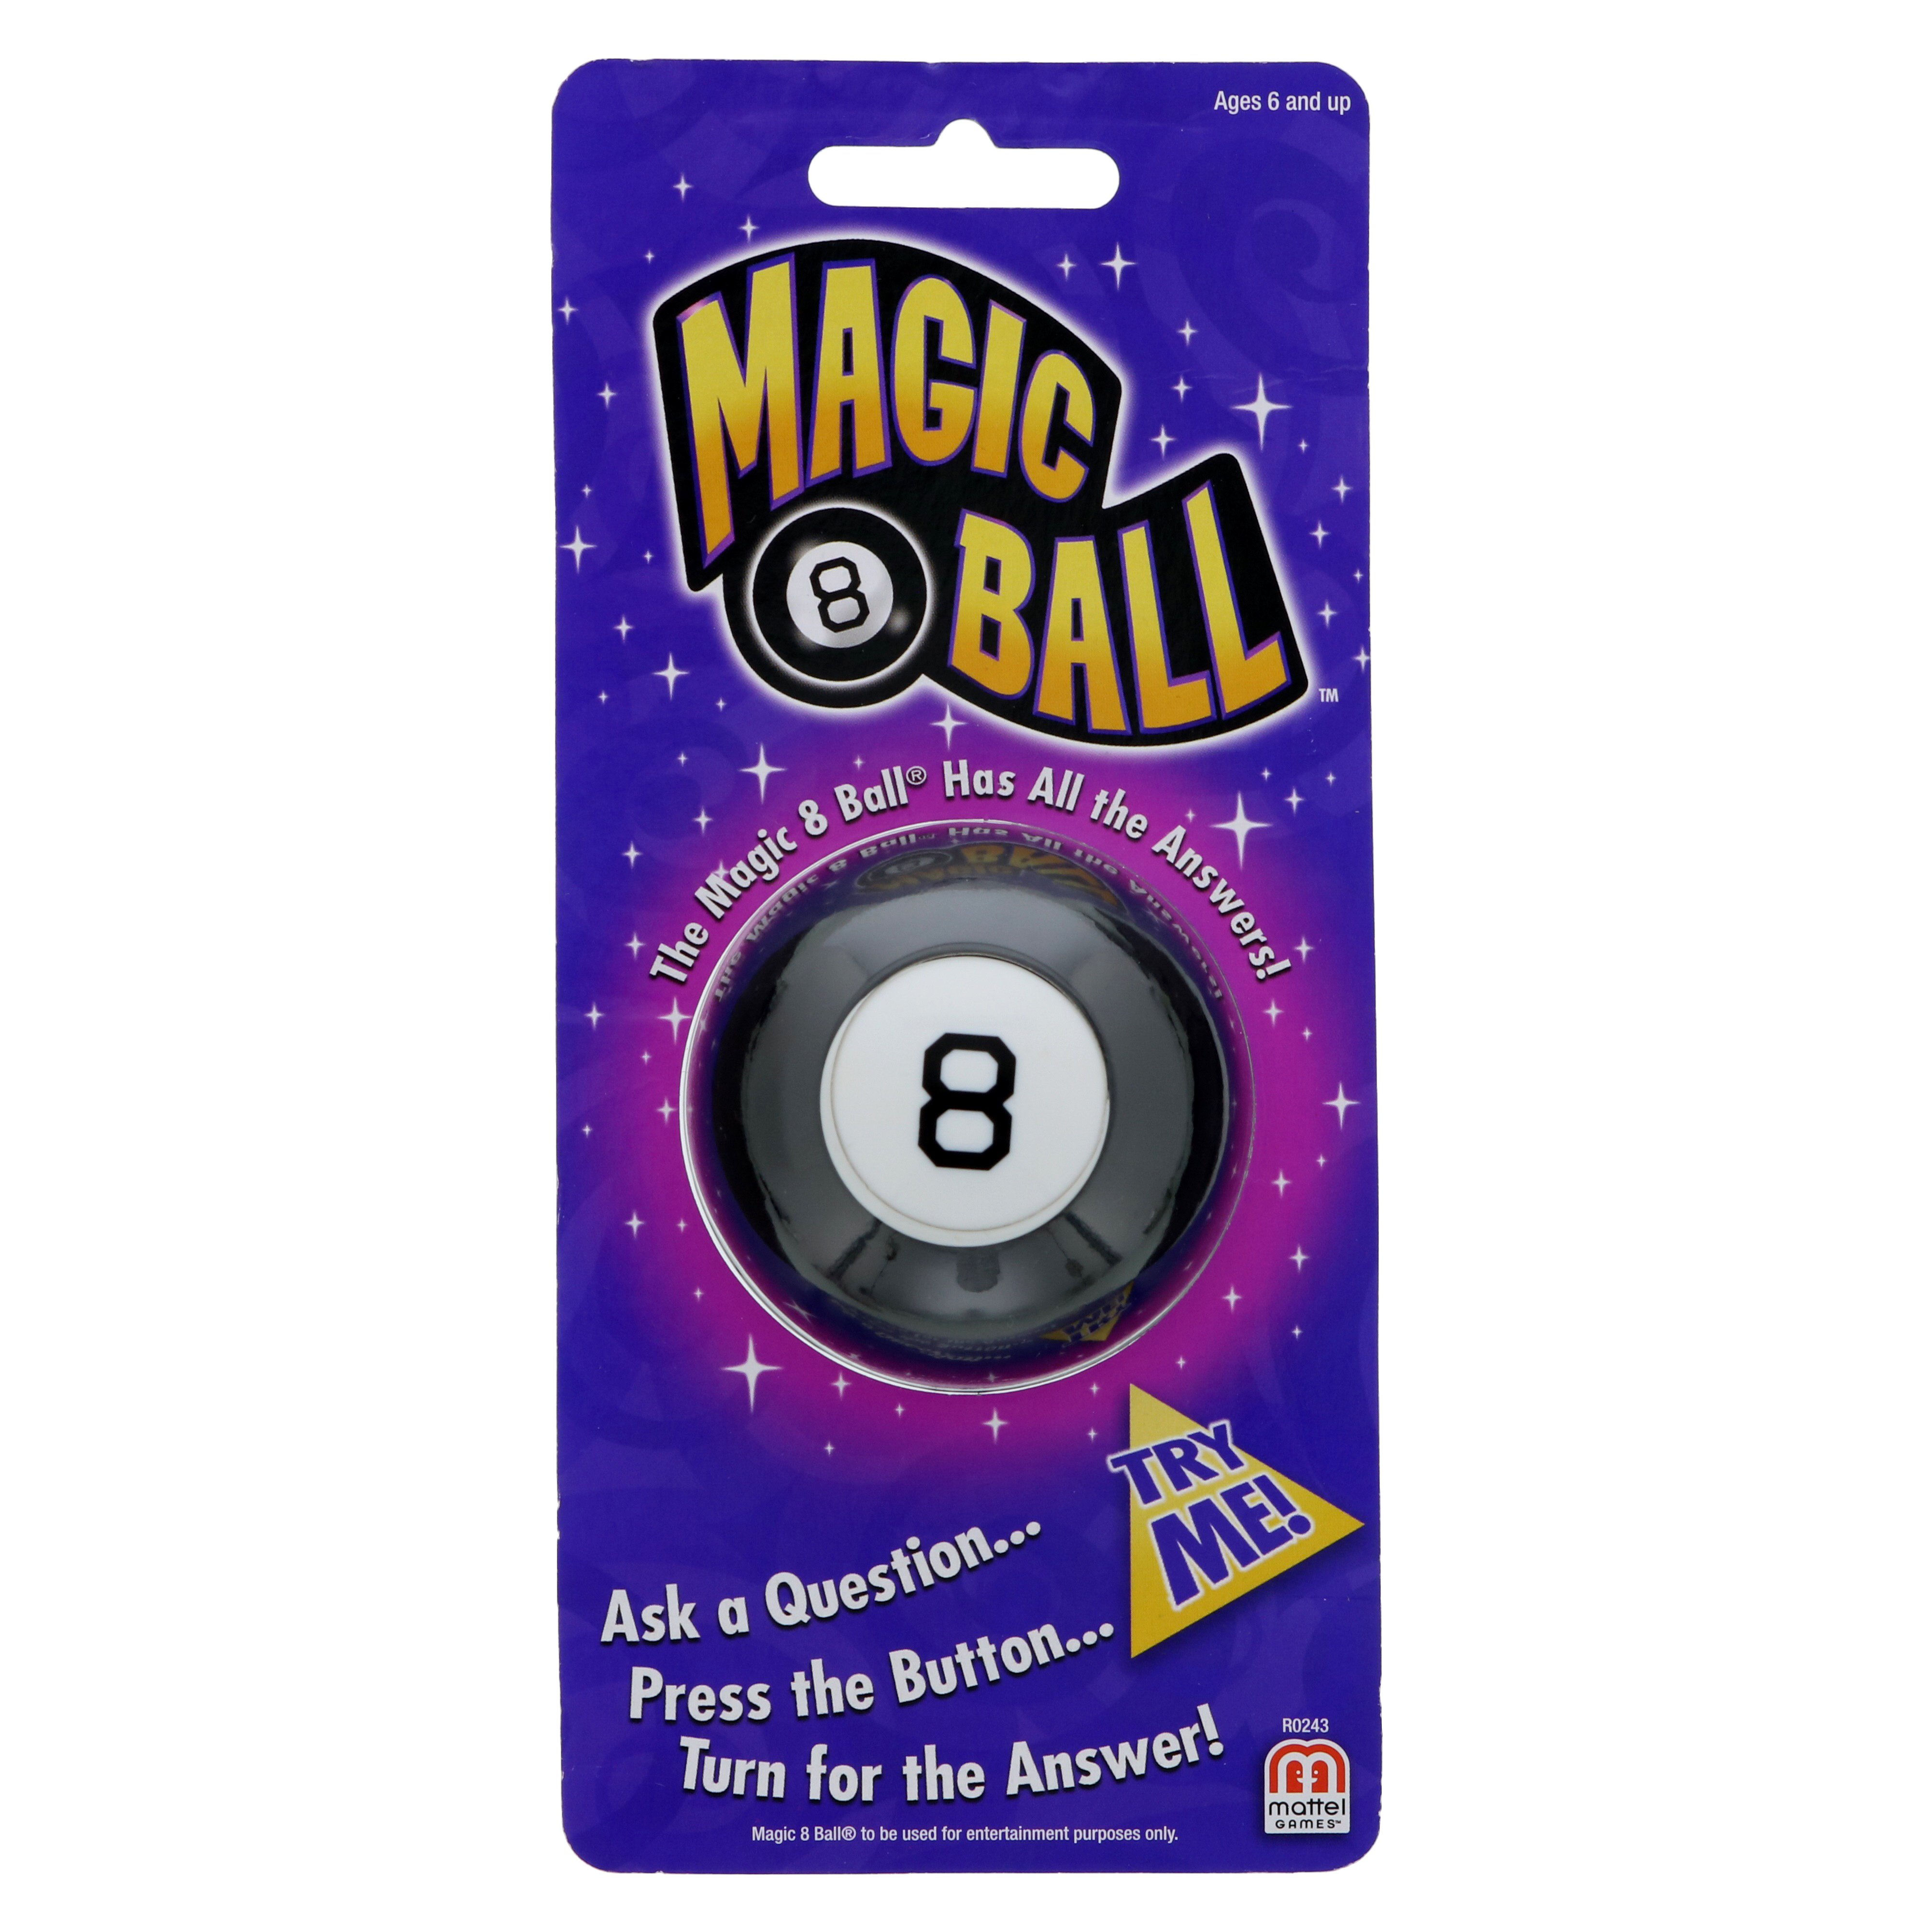 Mattel Magic 8 Ball Game